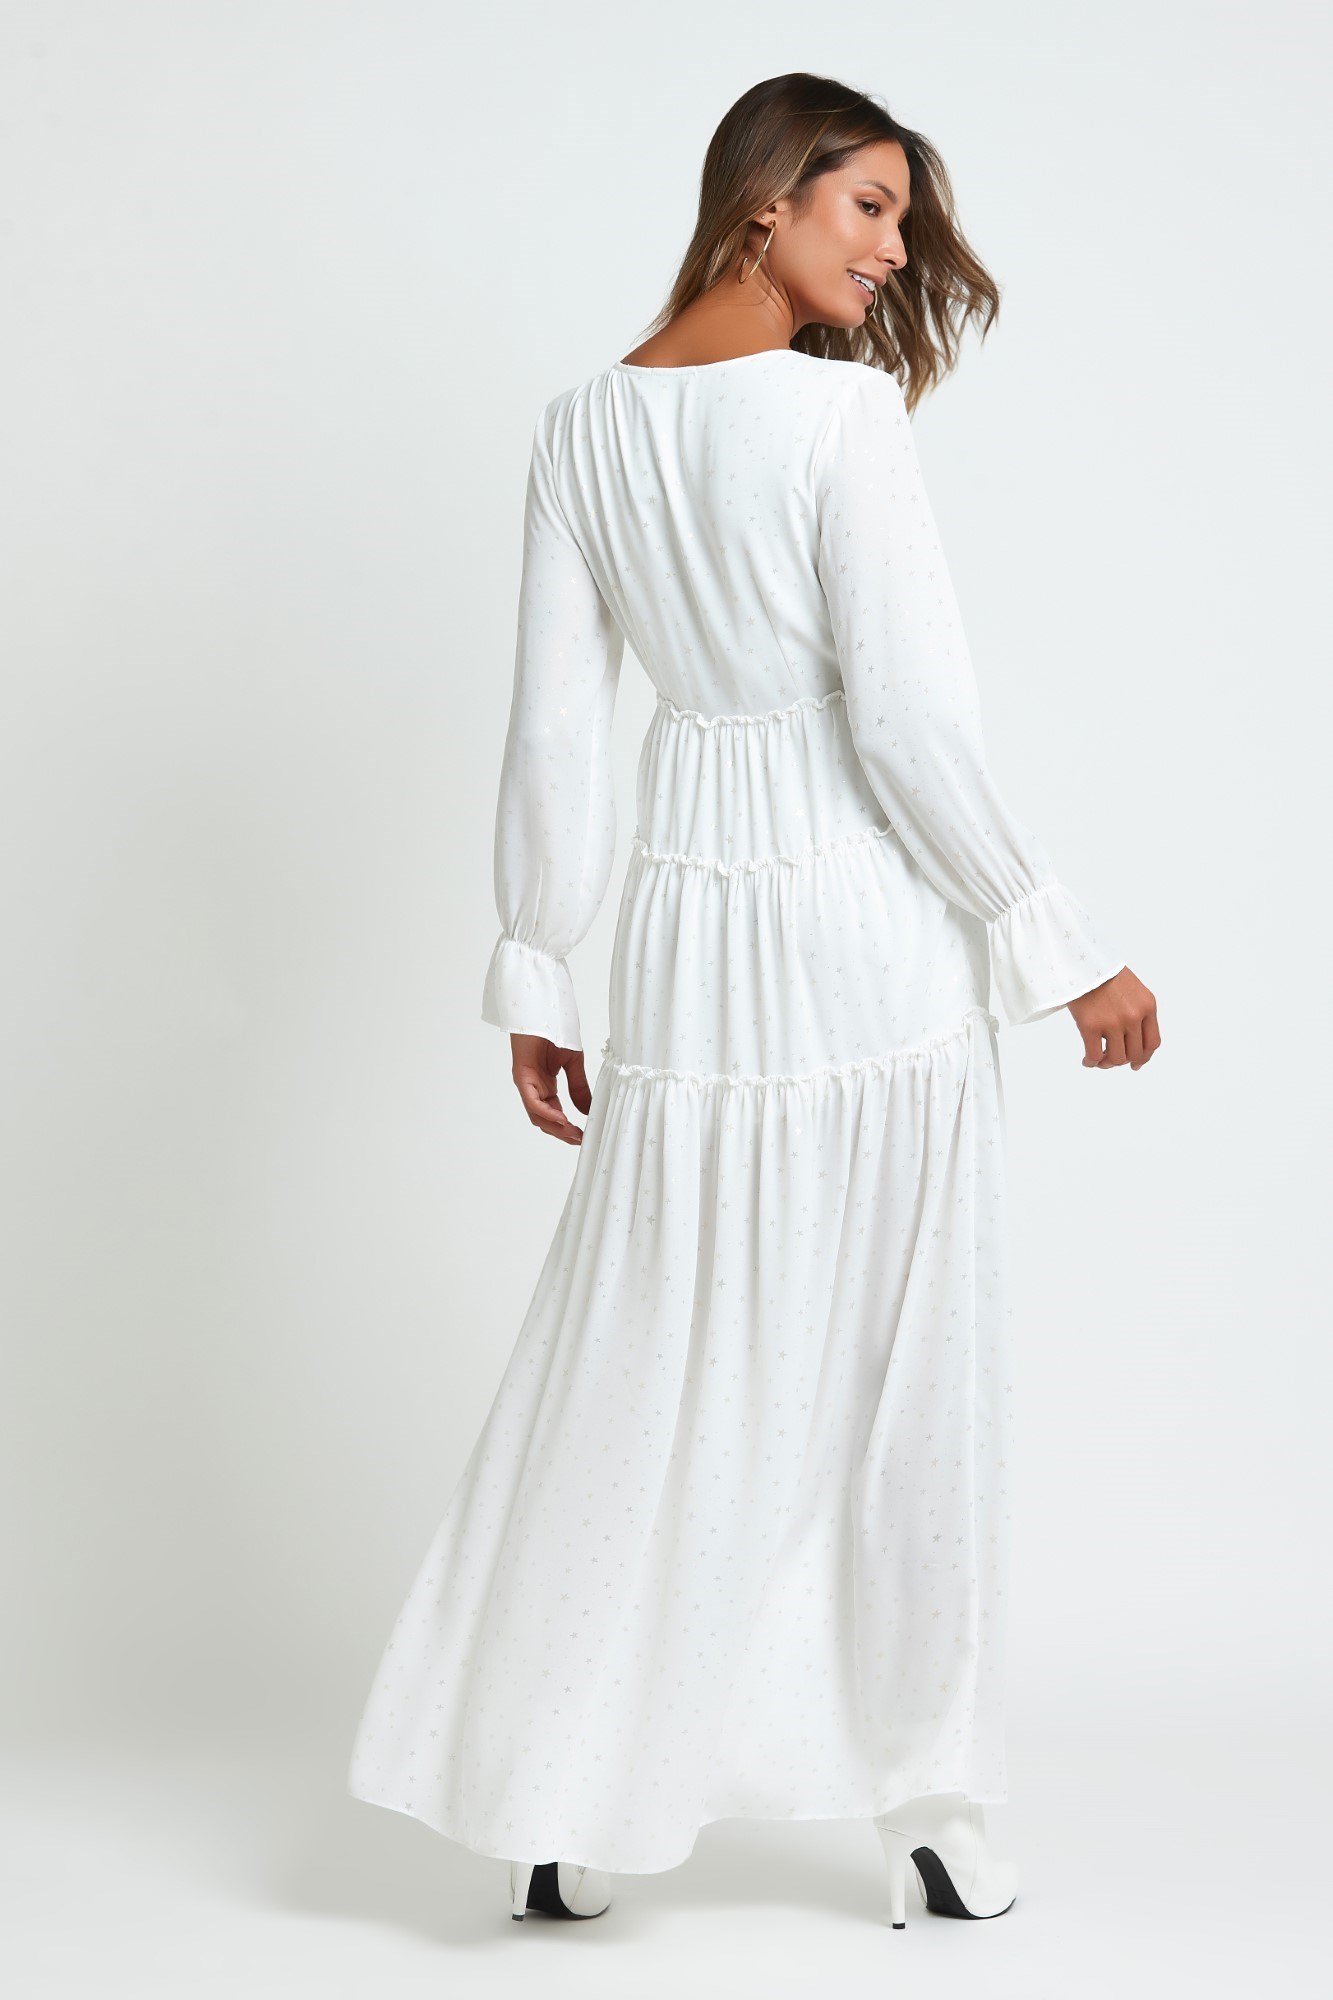 vestido longo branco com manga